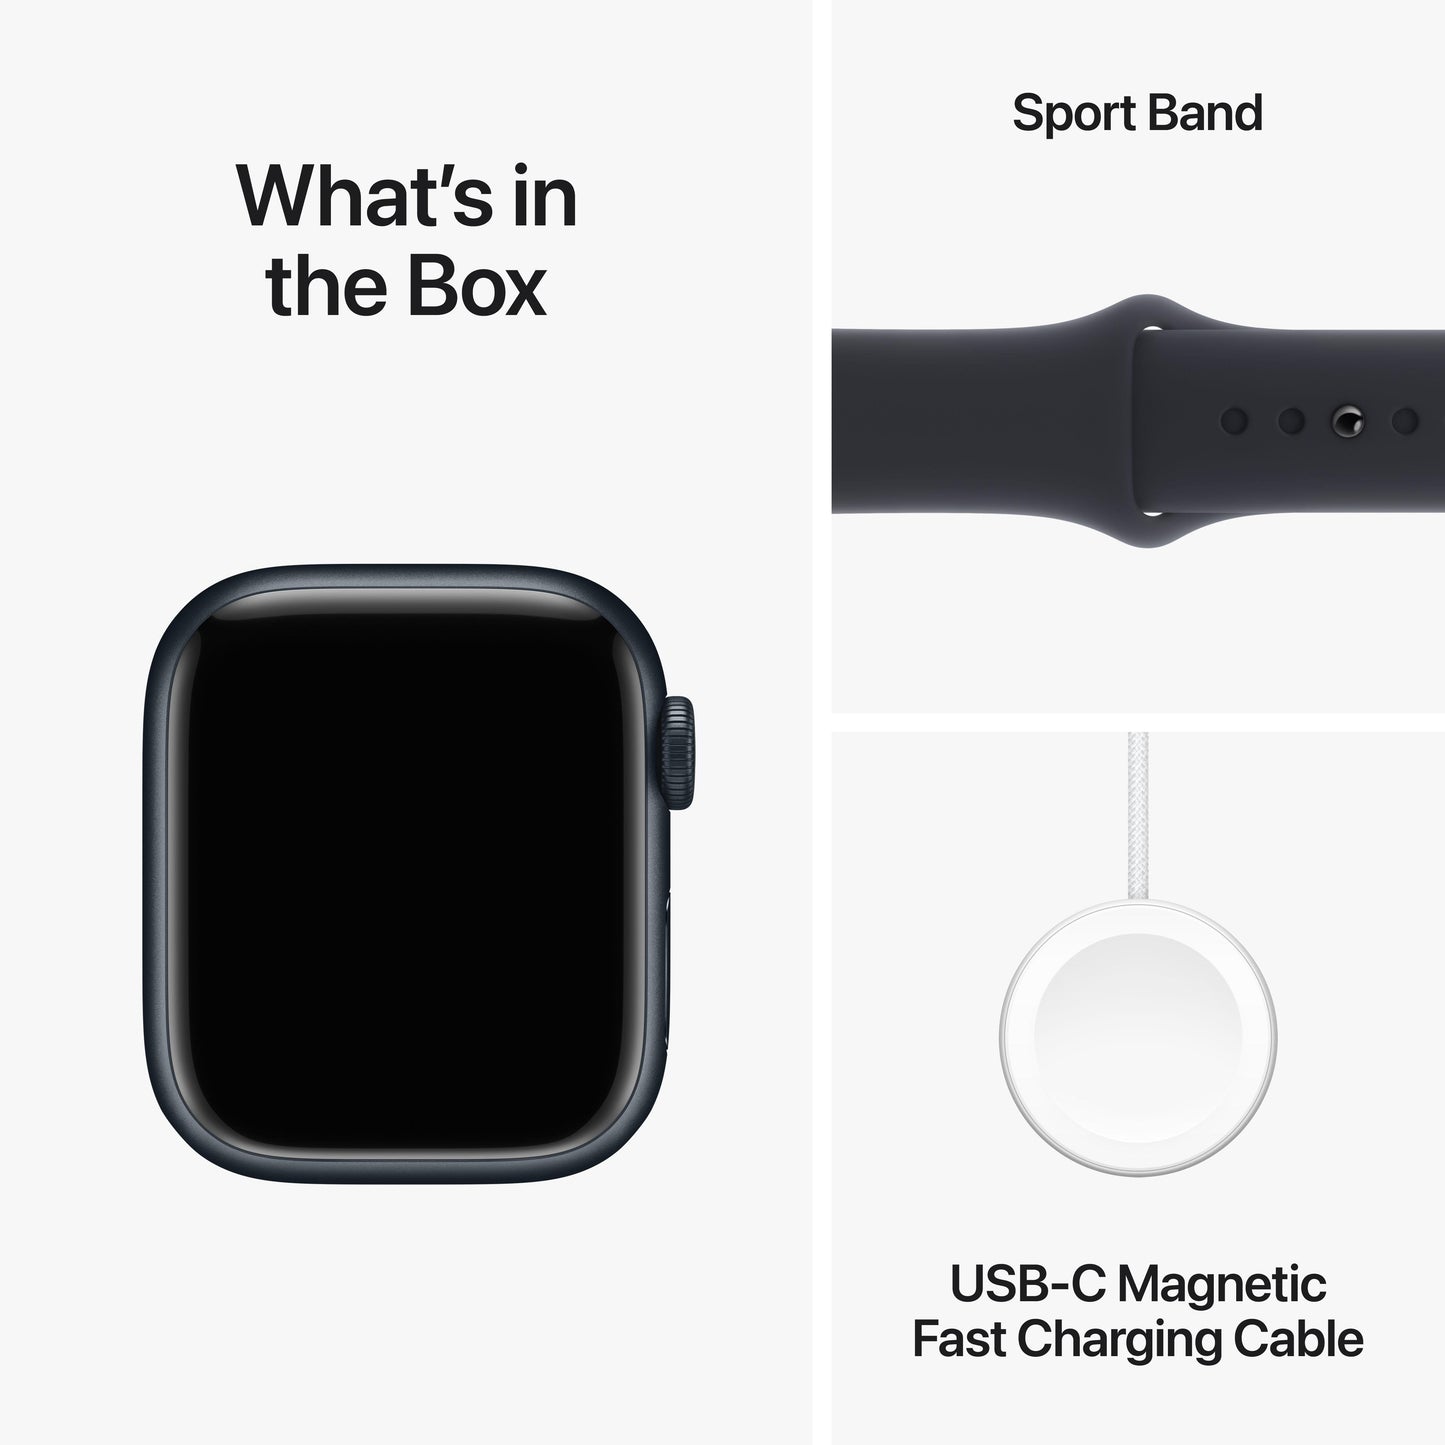 Apple Watch Series 9 GPS 41mm Midnight Alum Case w/ Midnight Sport Band - S/M